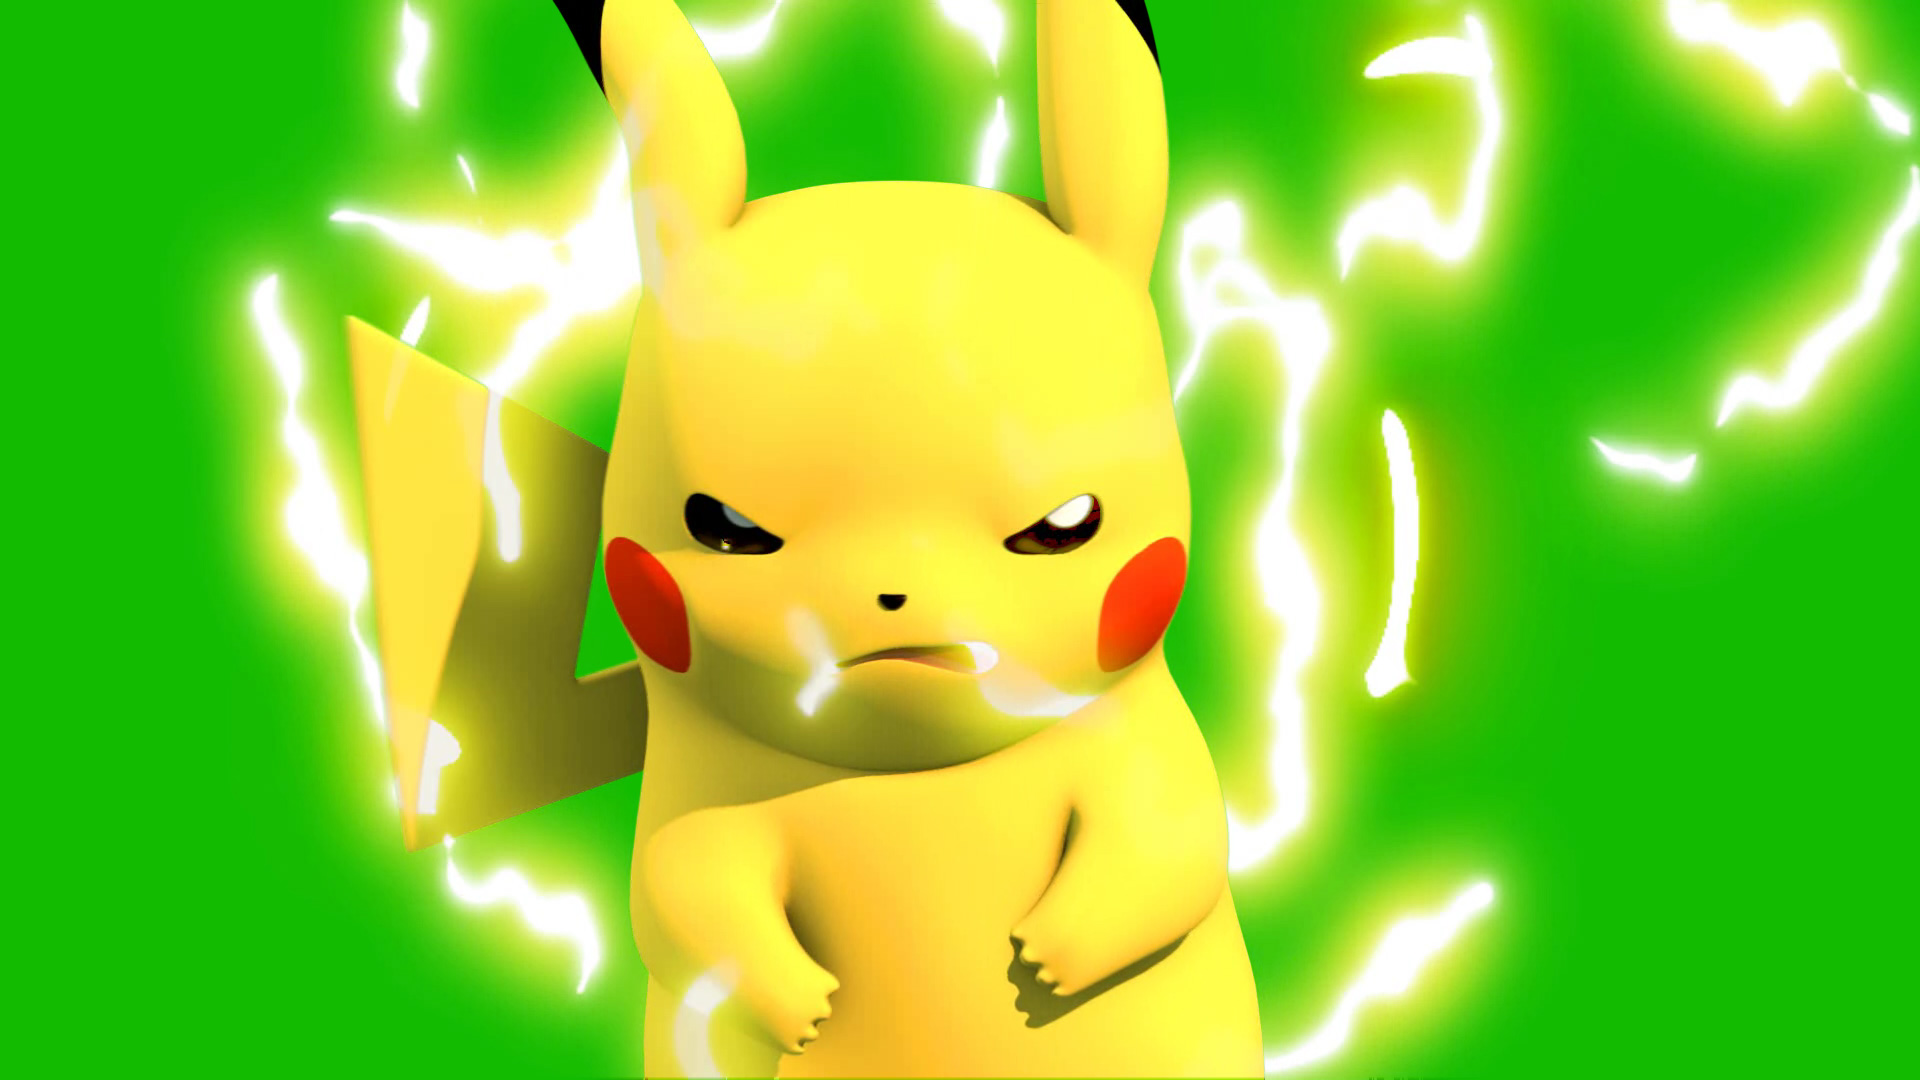 fondos de pantalla de pokemon en movimiento,verde,amarillo,dibujos animados,gráficos,clipart